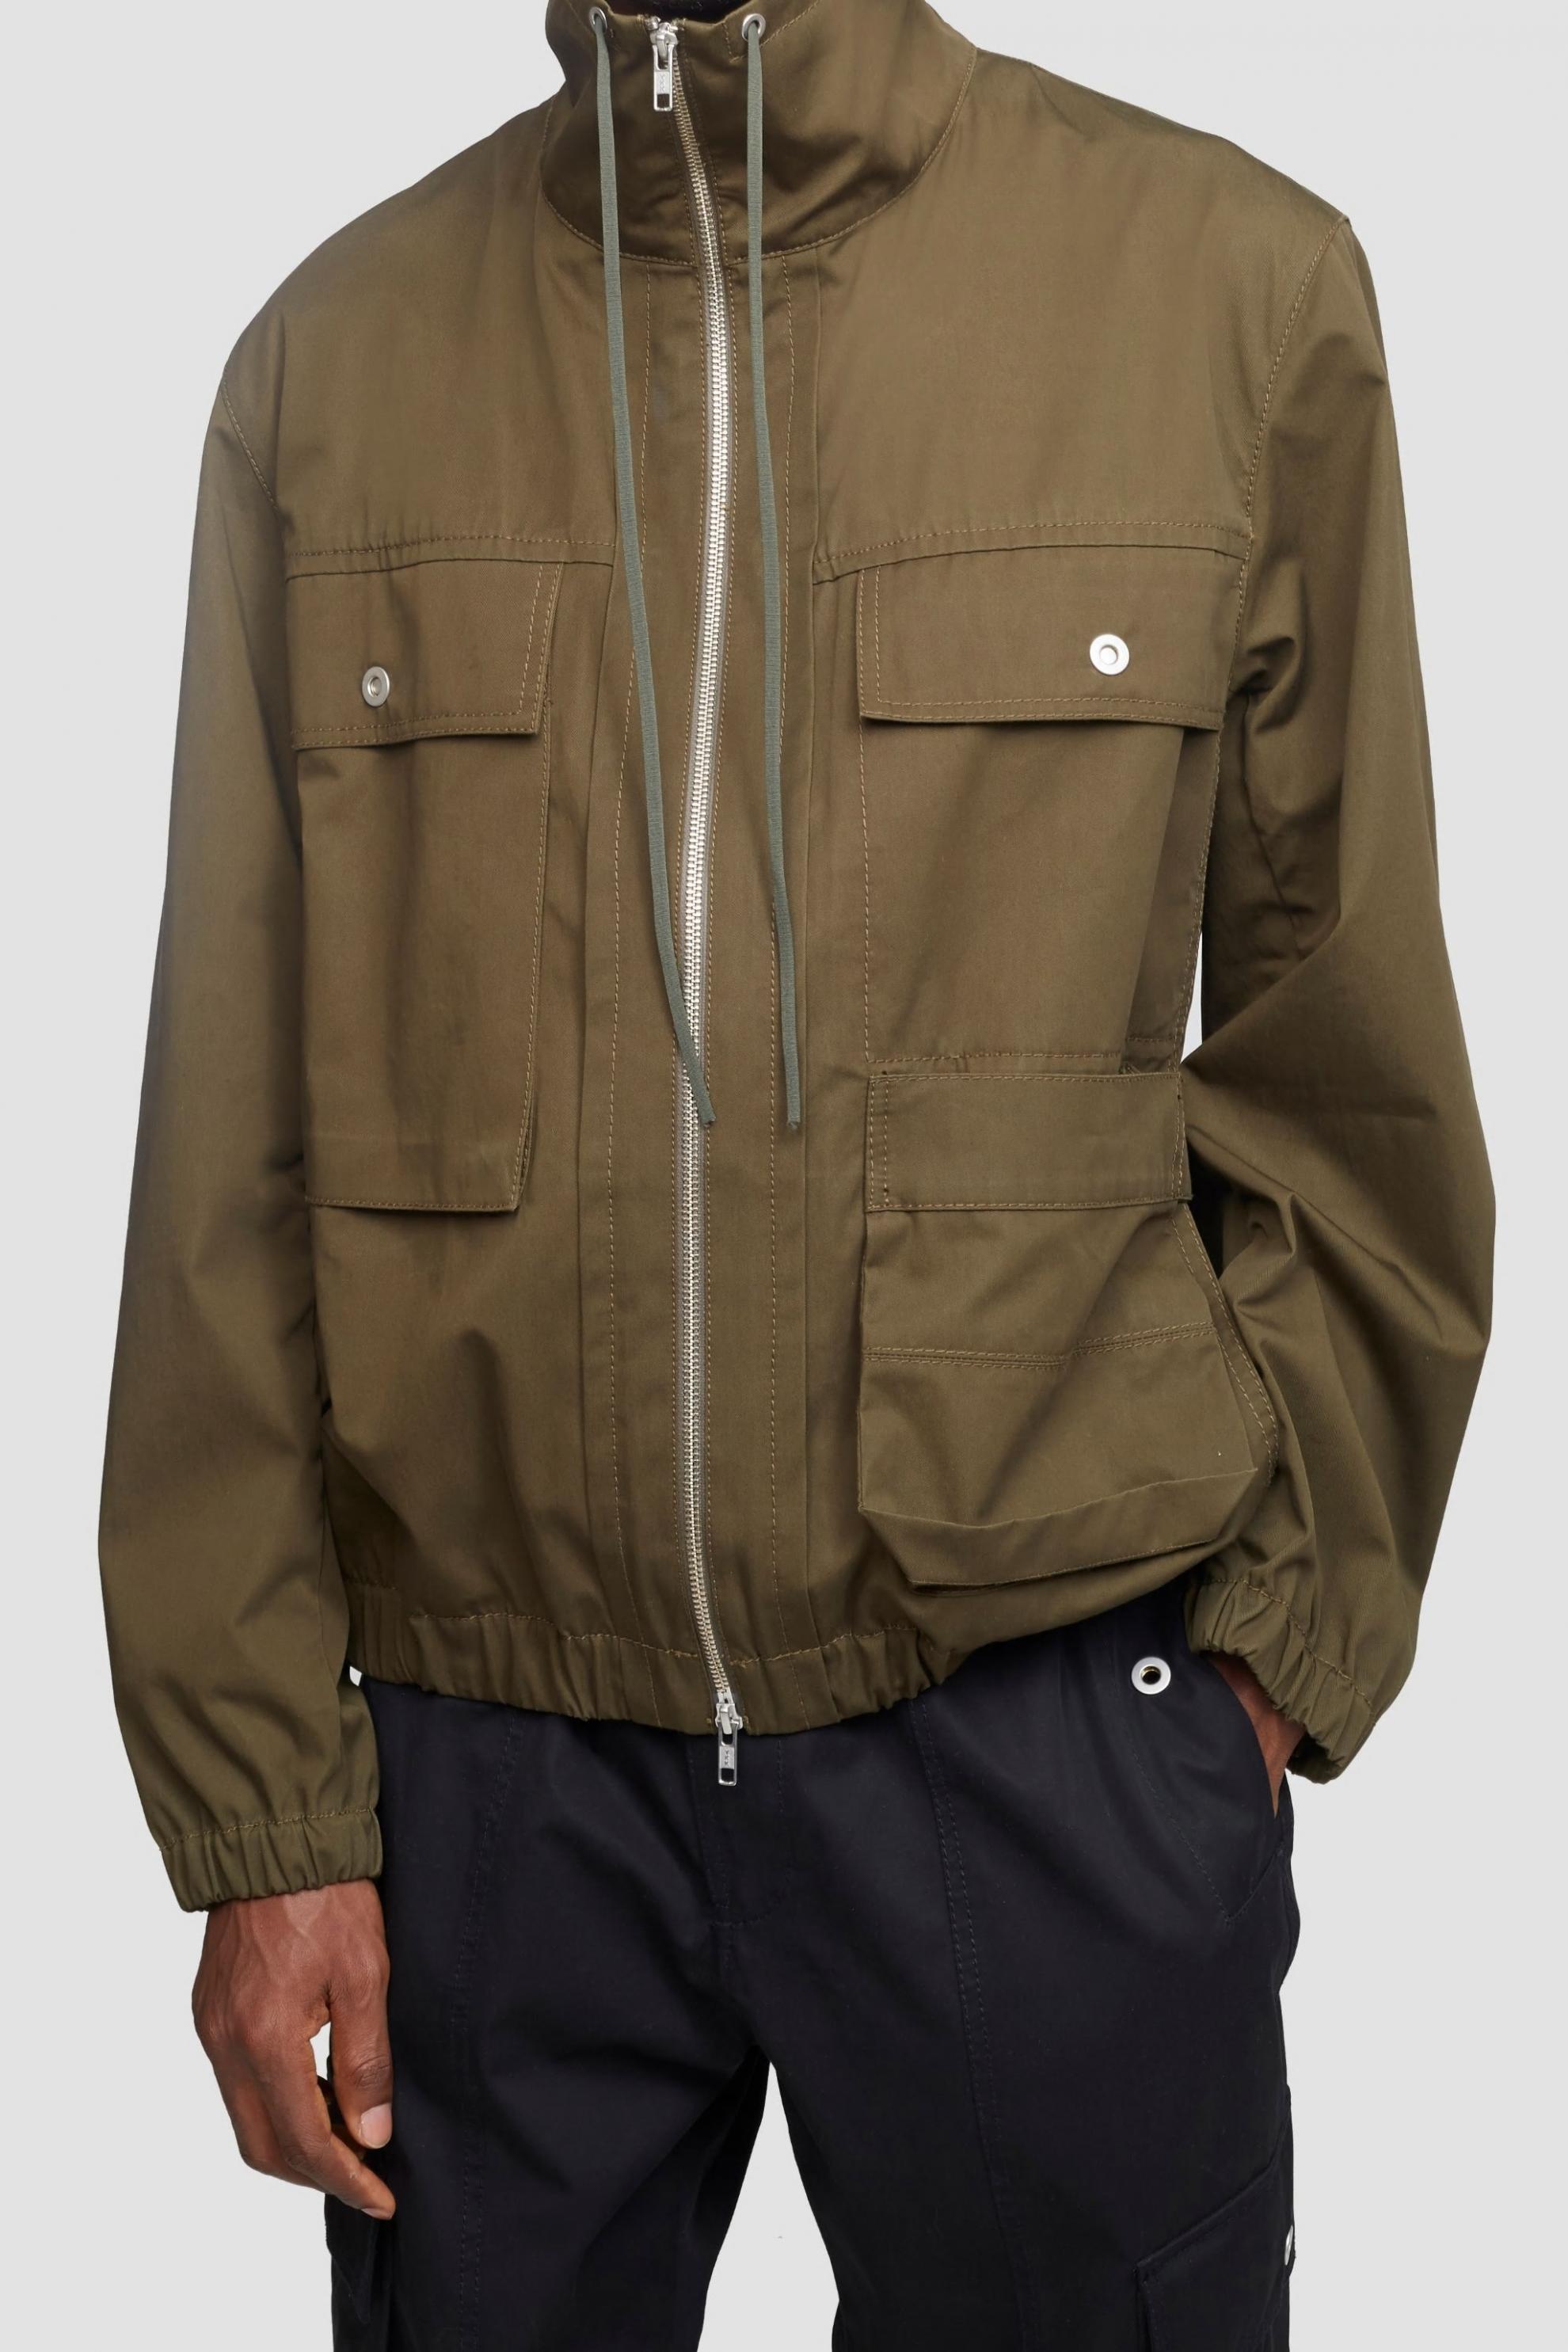 3.1 Phillip Lim Utility Jacket Olive | Mens Jackets & Outerwear